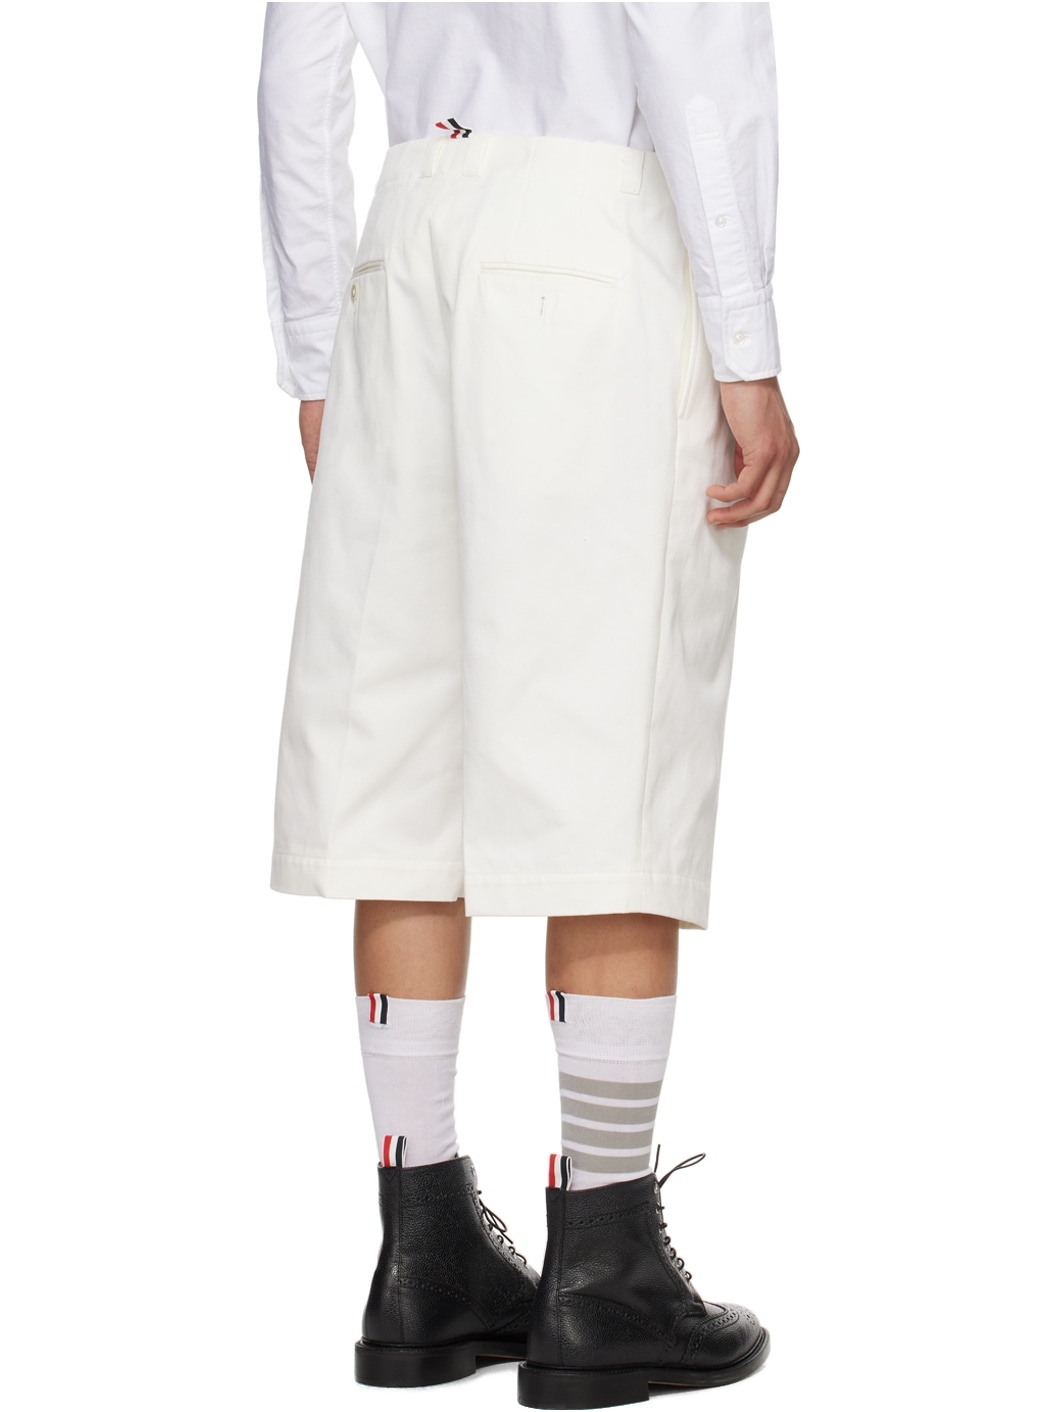 White Unconstructed Shorts - 3